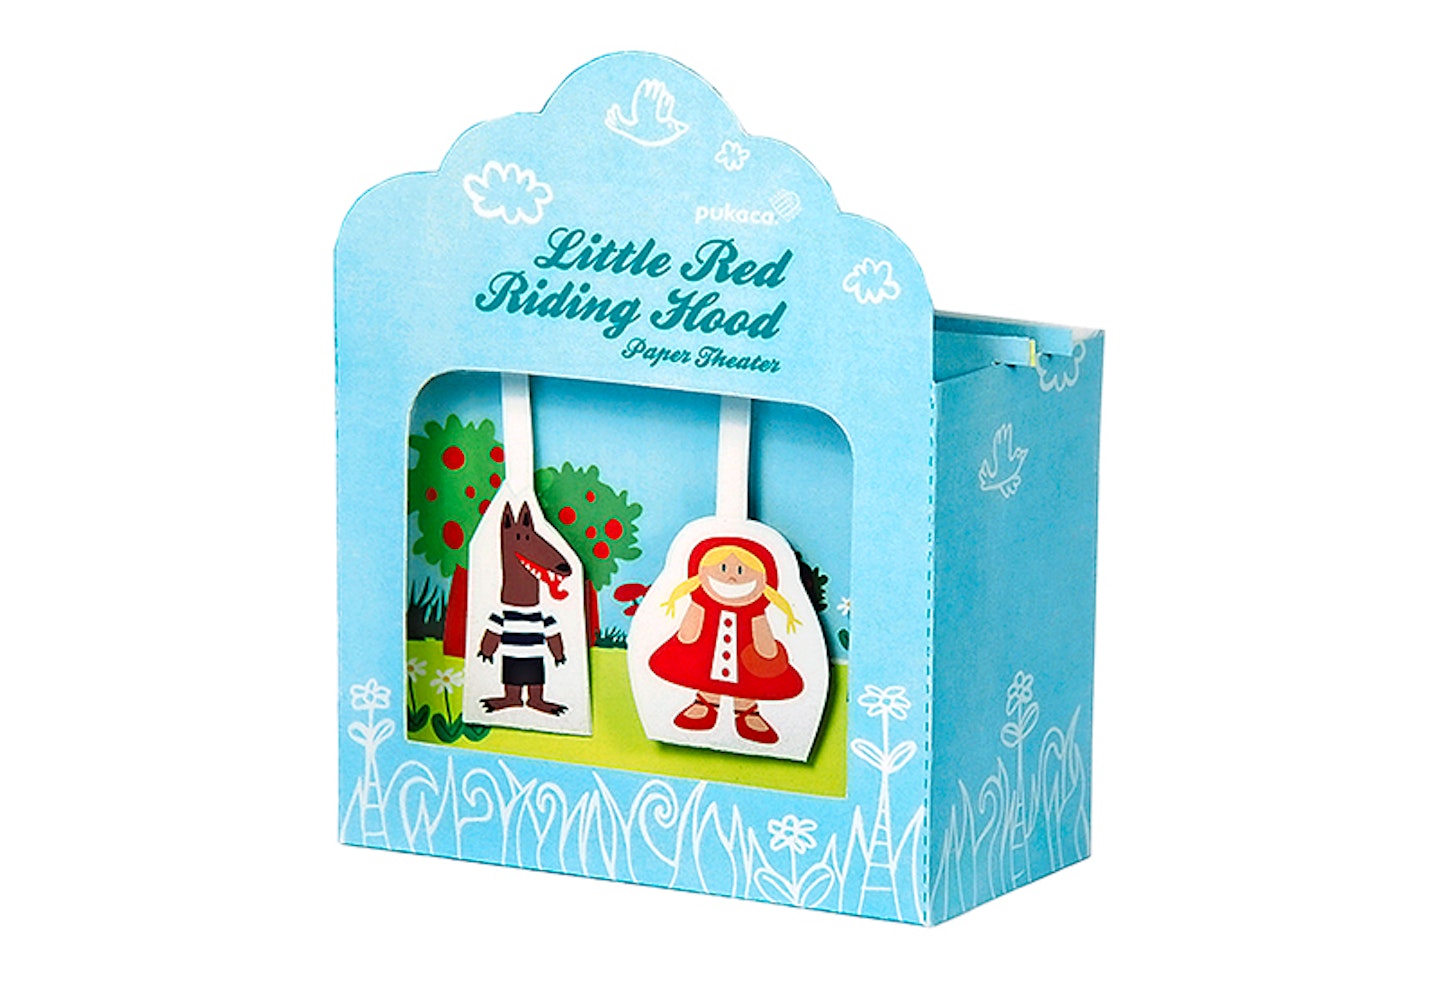 Little Red Riding Hood paper theatre, £6, loubilou.com